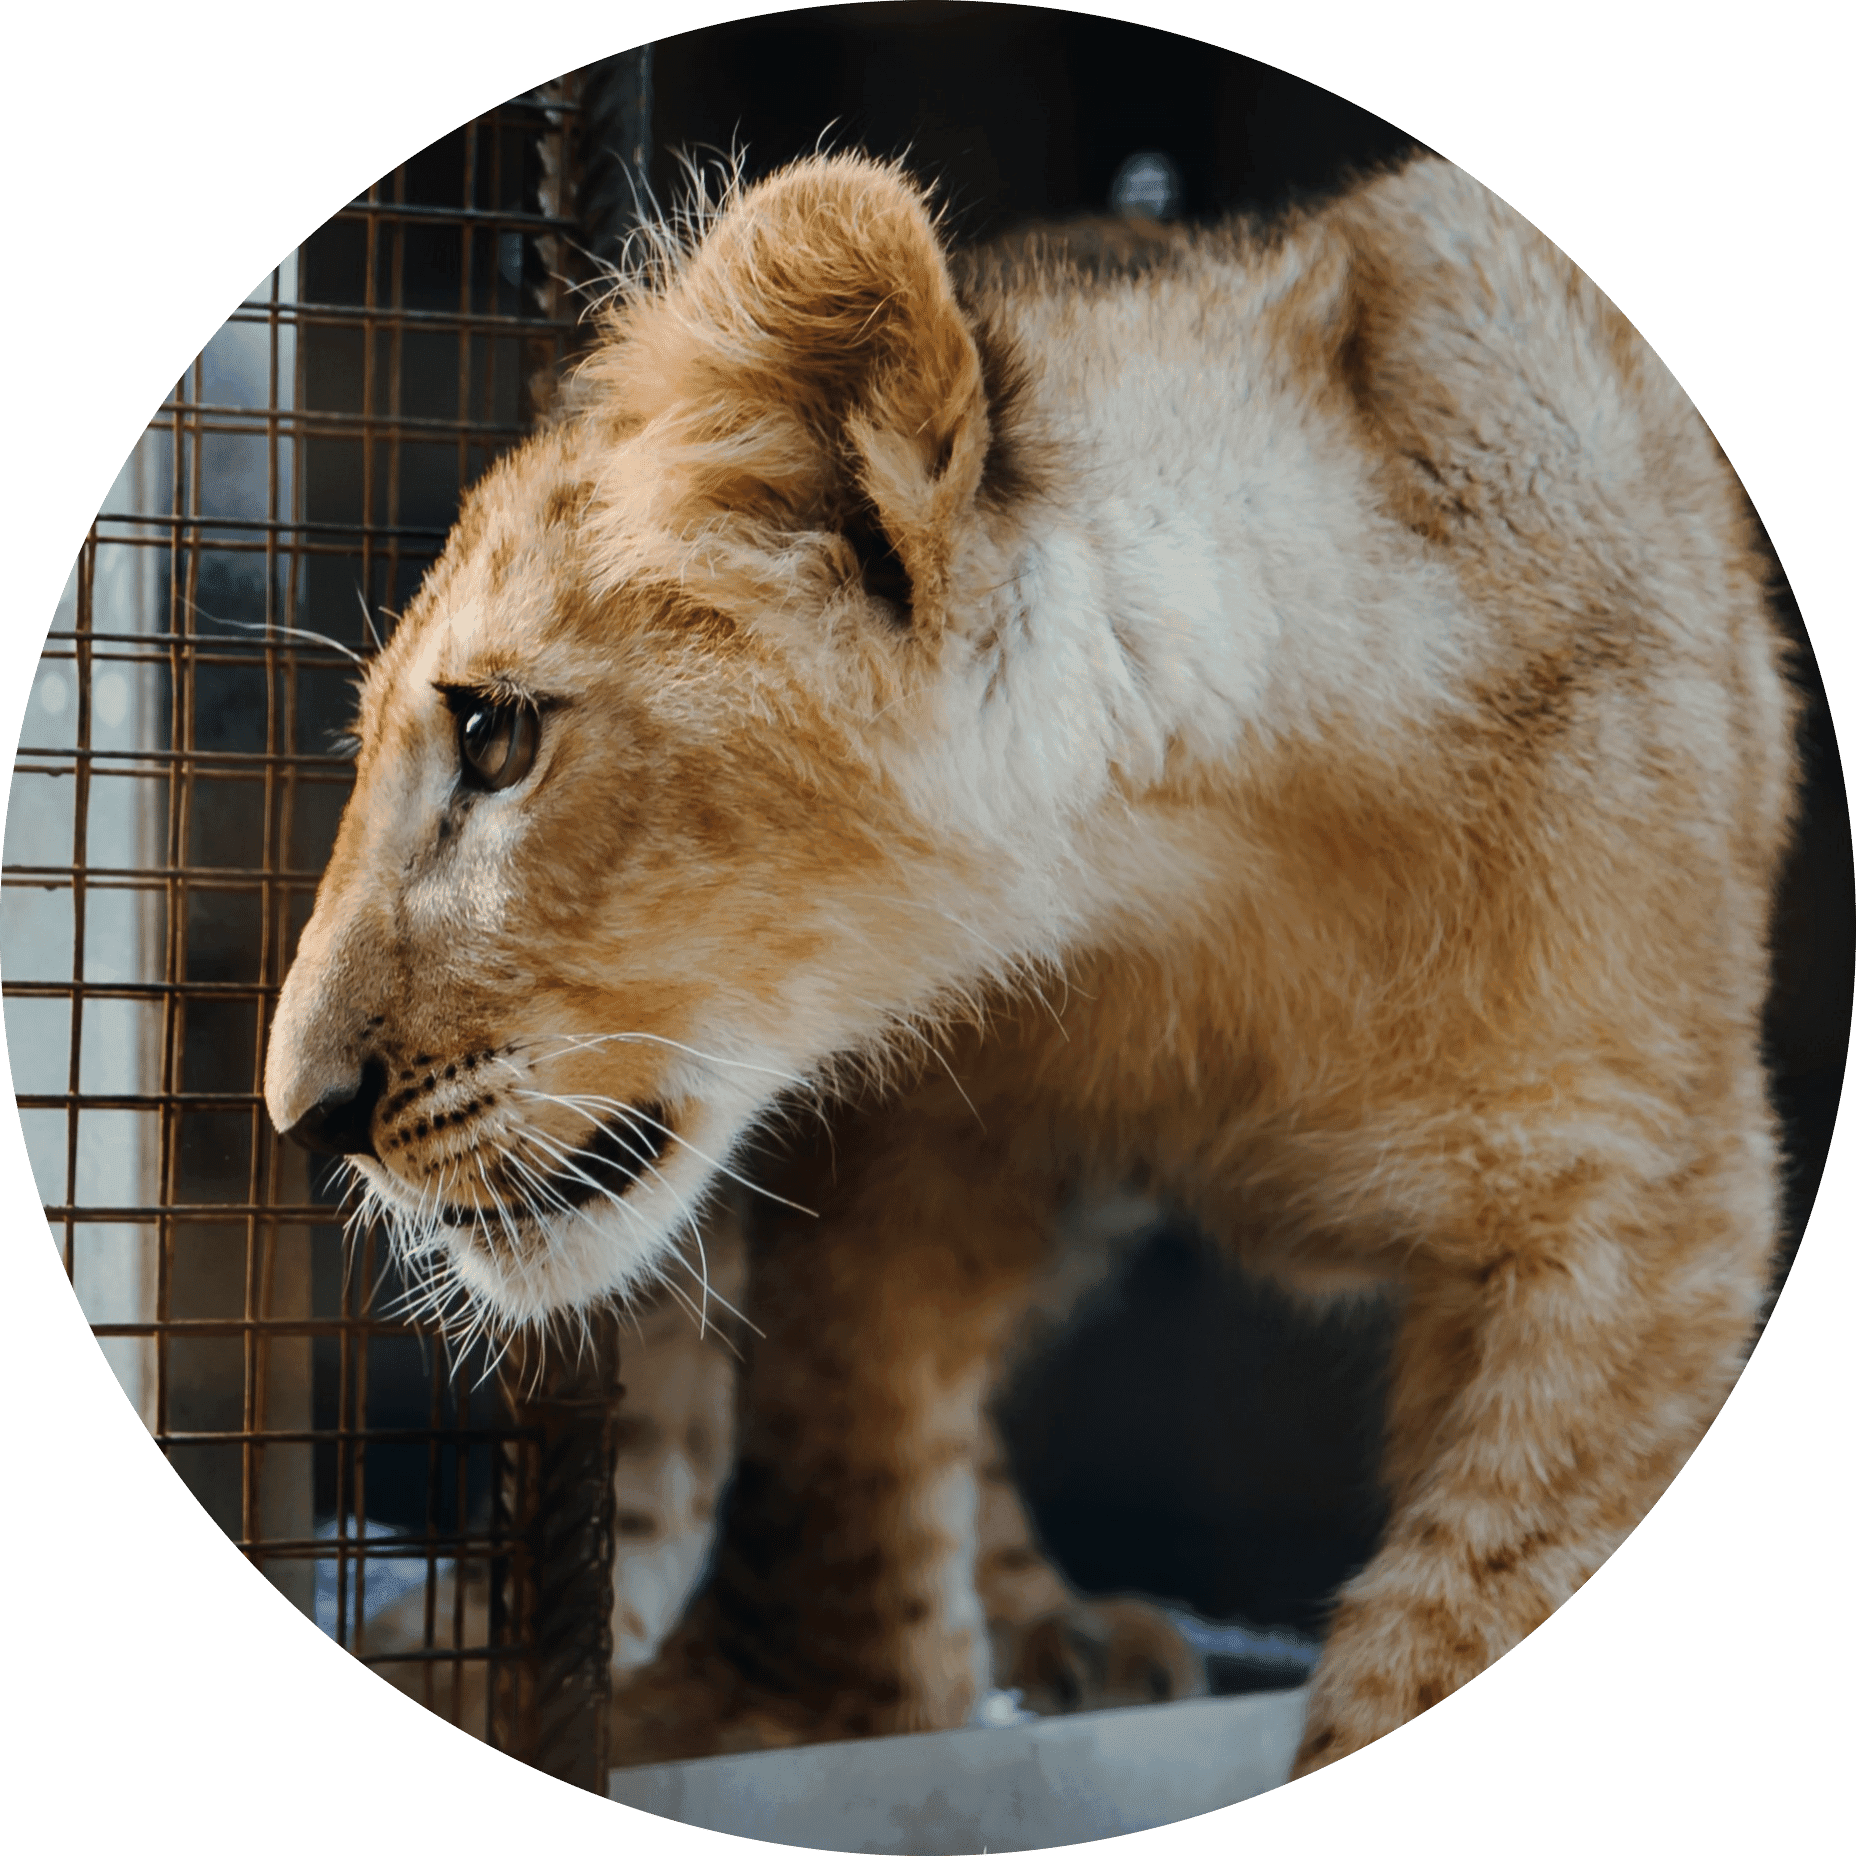 Lion cub exiting cage